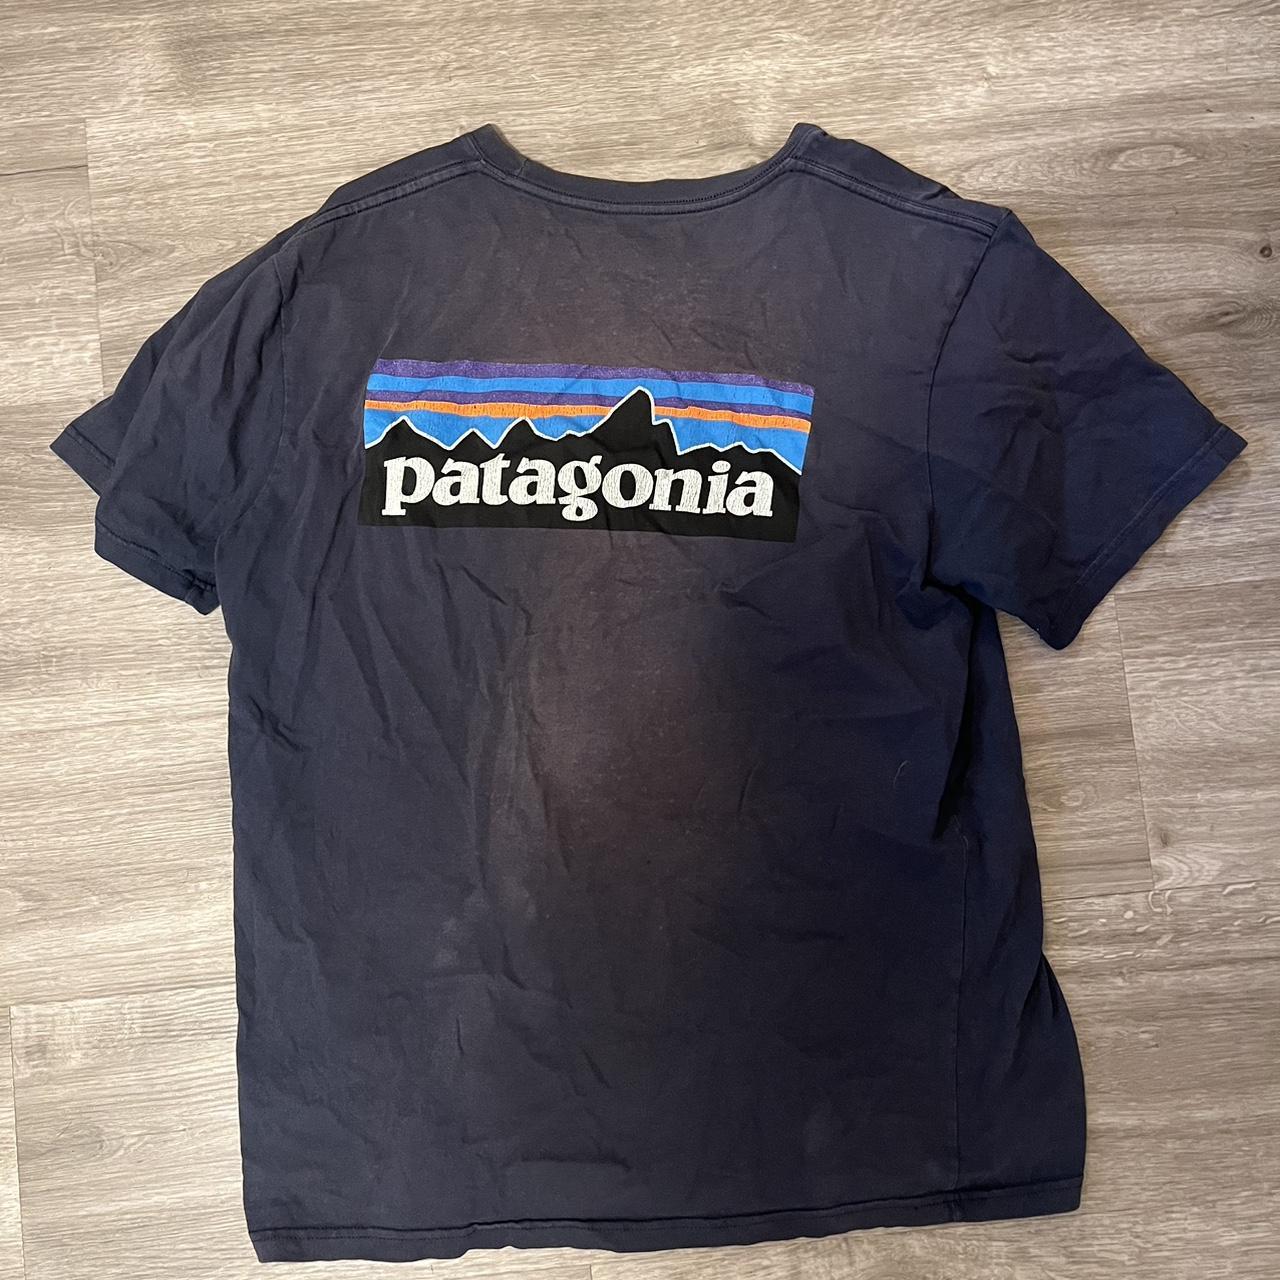 Patagonia Men's Navy and Blue T-shirt (2)